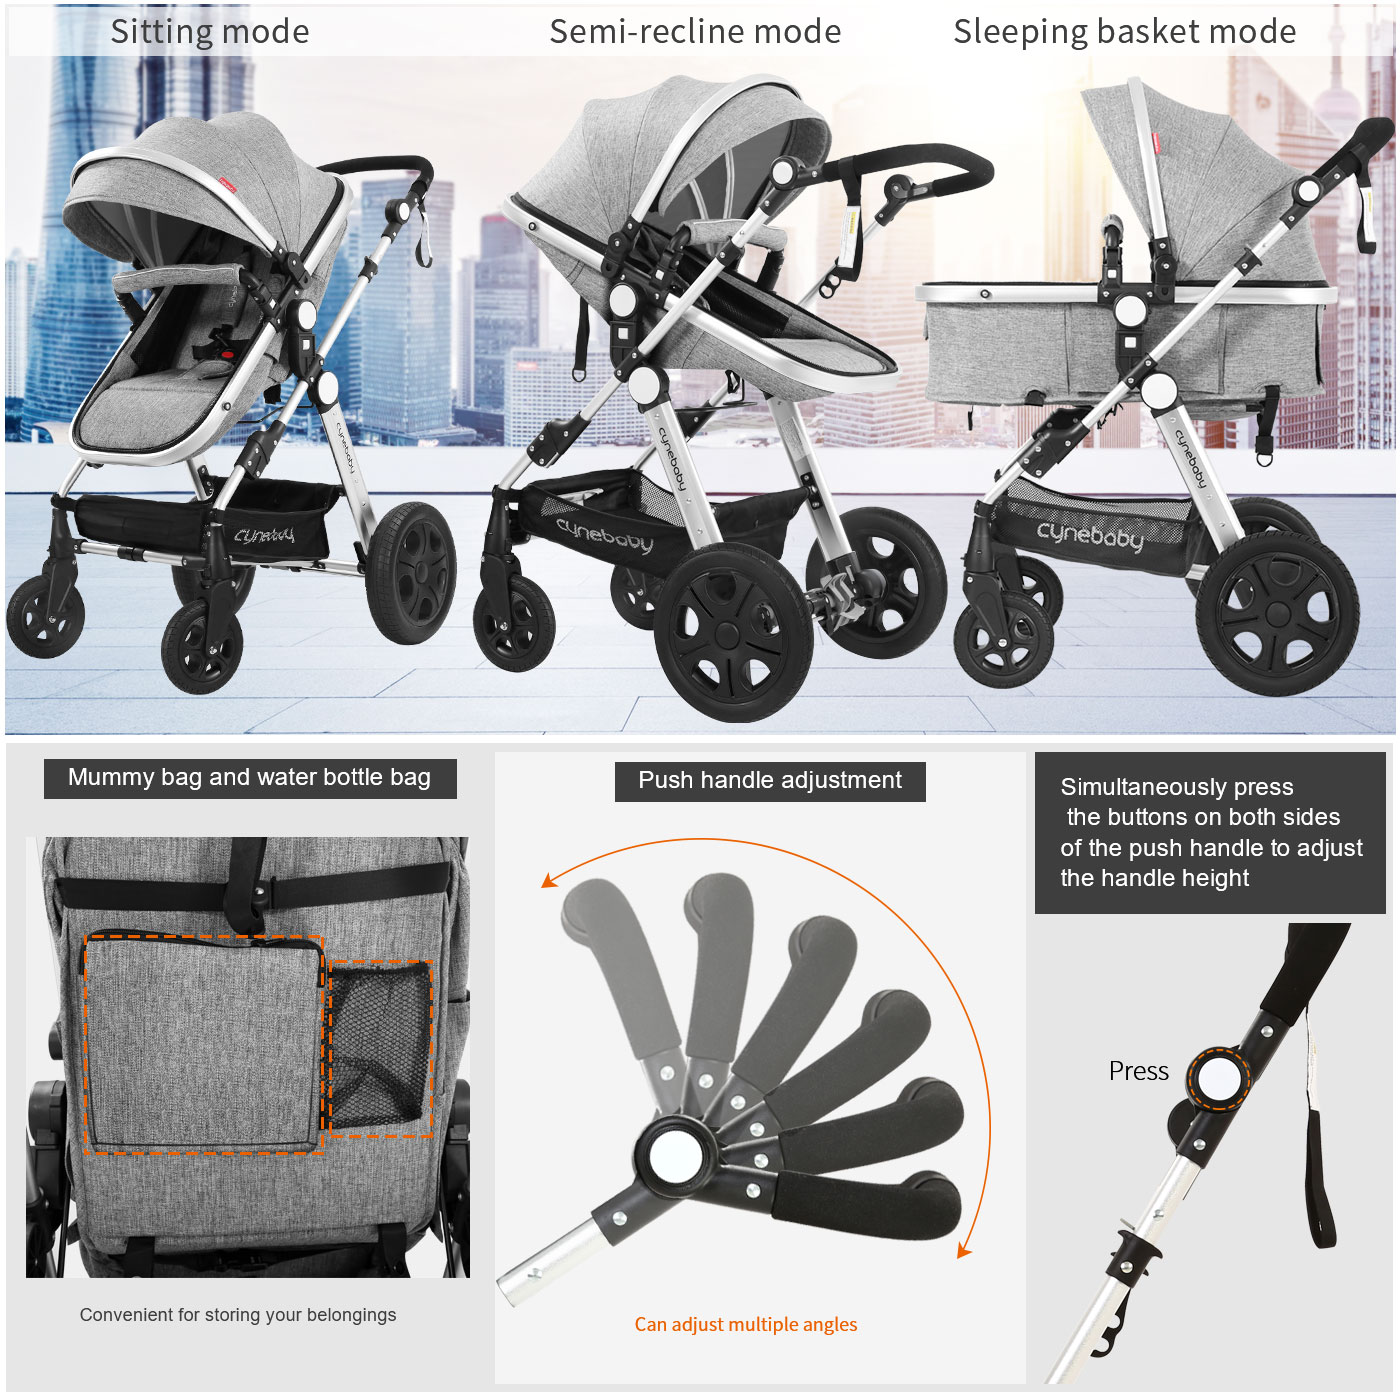 Cynebaby Newborn Infant Toddler Baby Stroller for Newborn Baby, Gray - image 4 of 9